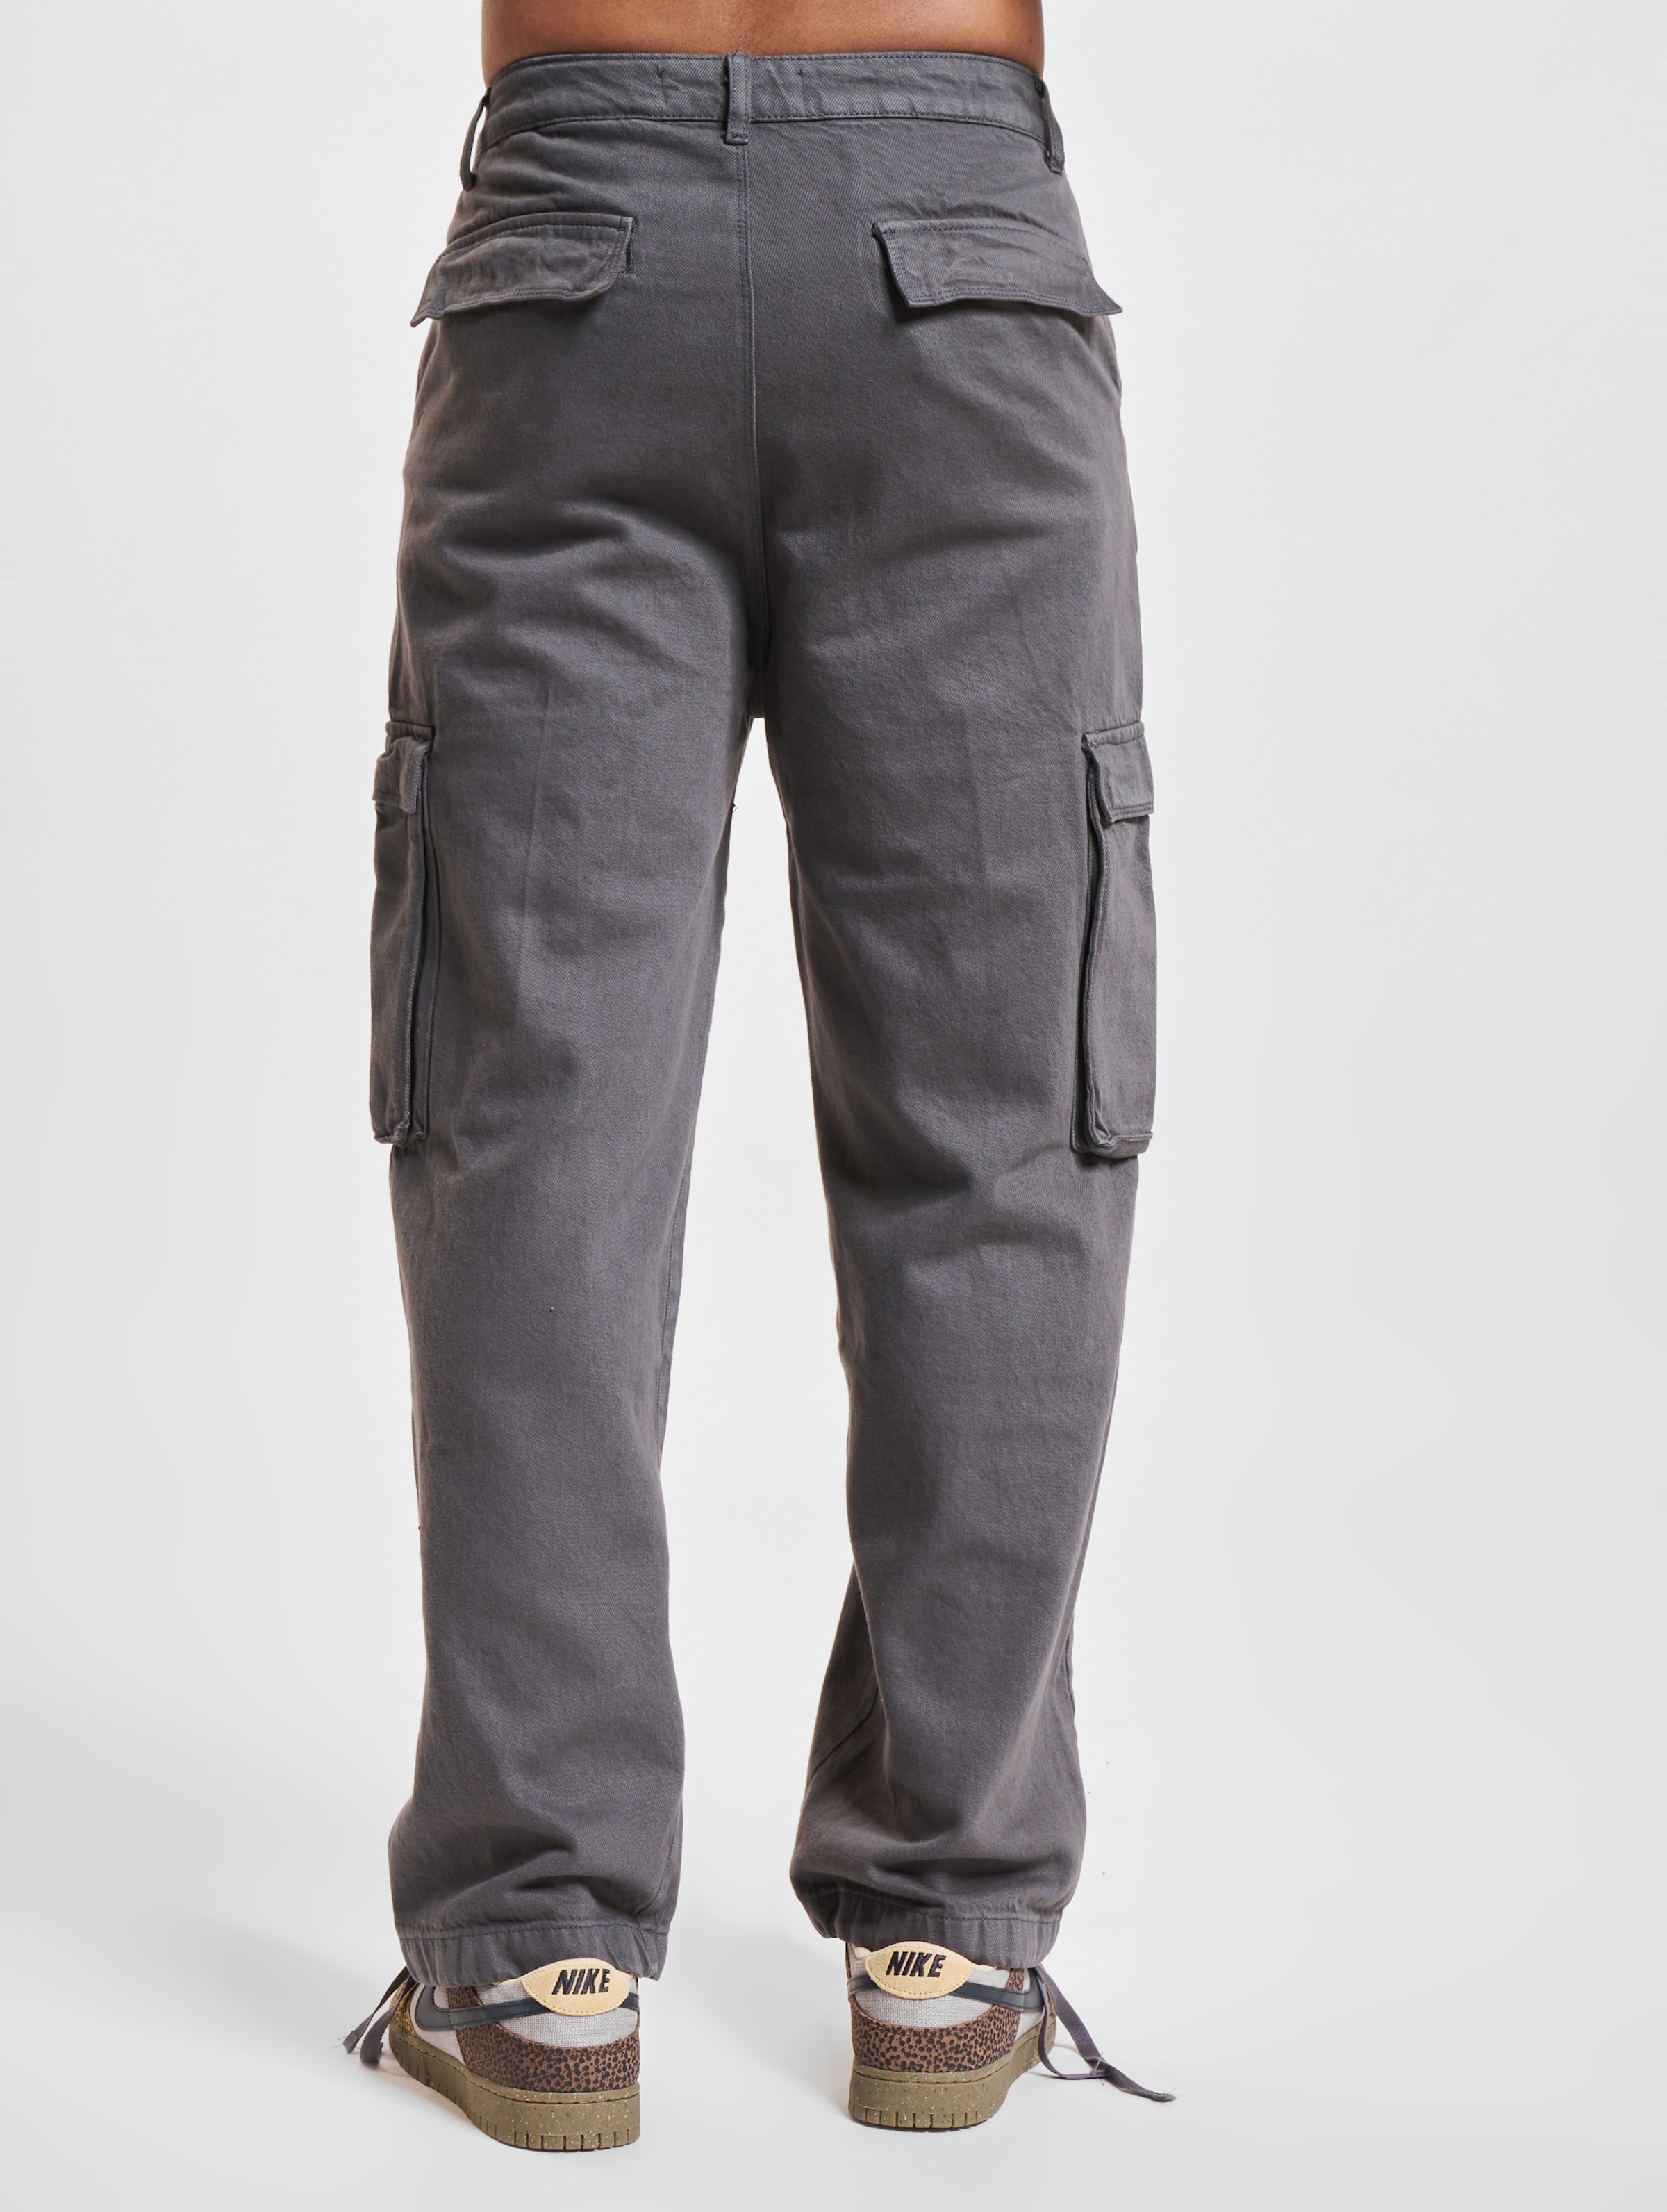 Plain Men's Cargo Pants, Regular Fit at Rs 400/piece in Mumbai | ID:  23560257997